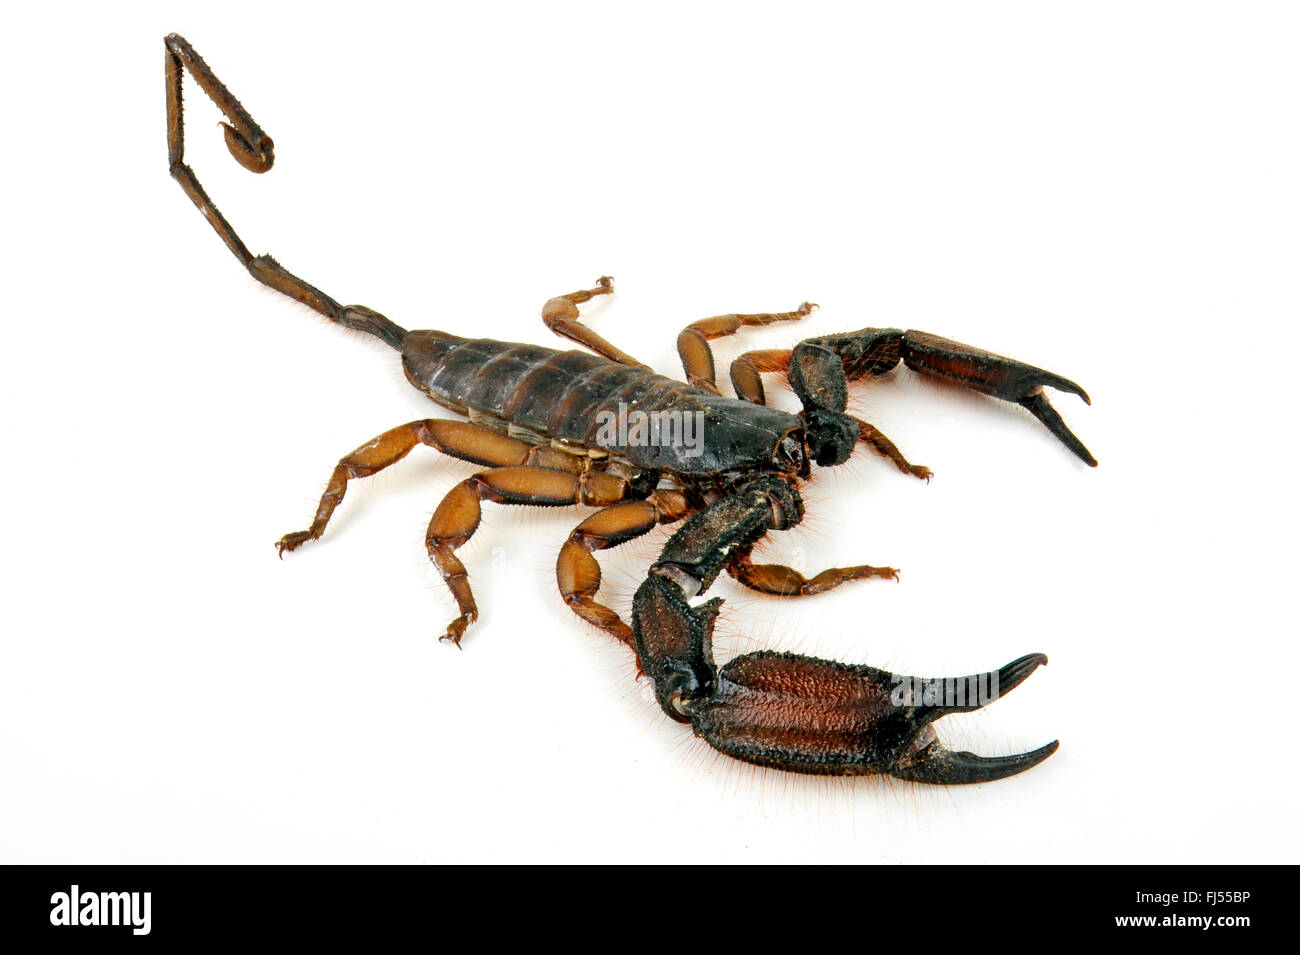 South African rock scorpion (Hadogenes troglodytes), cut-out Stock Photo